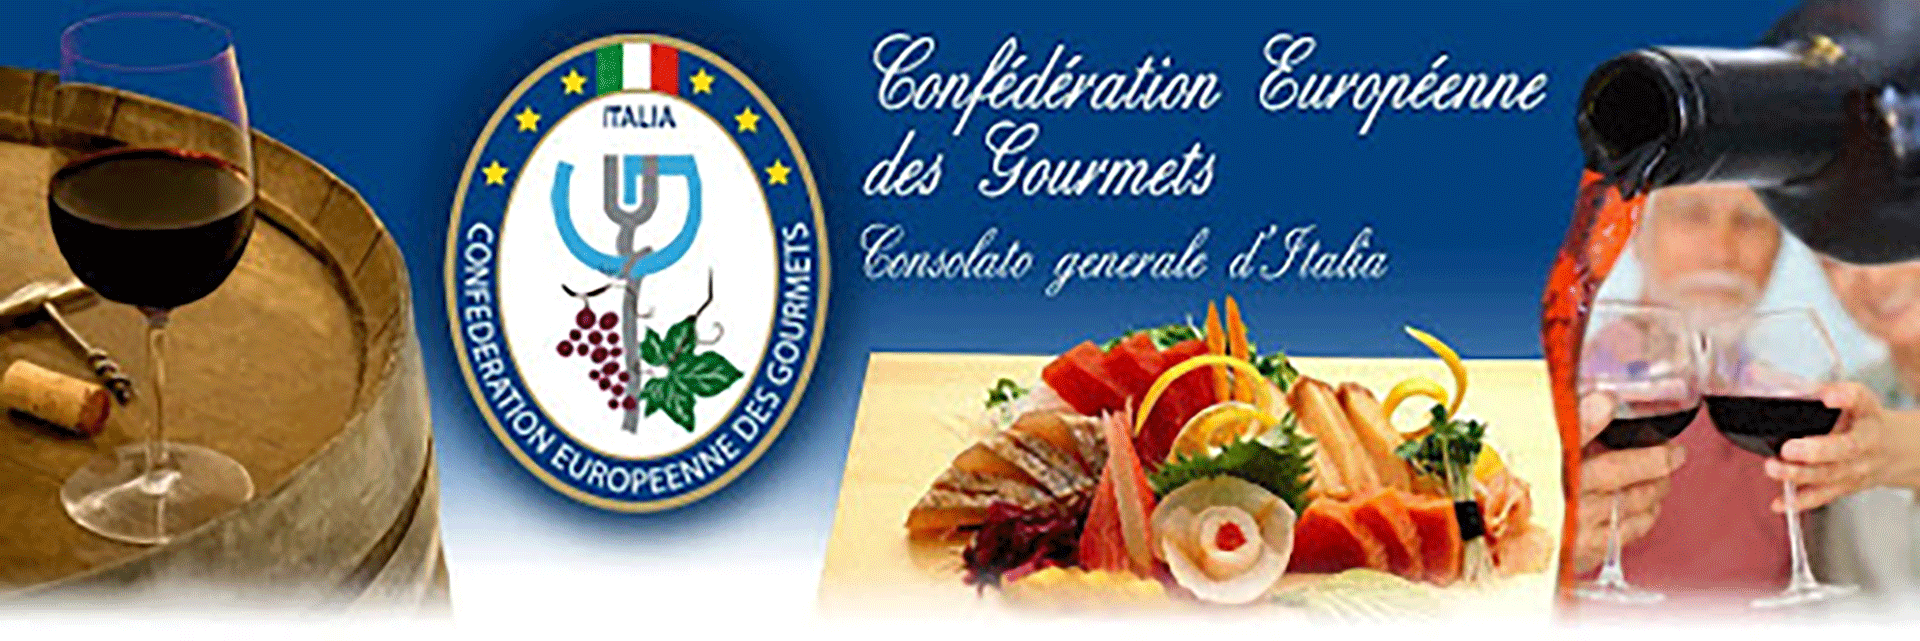 Confederation Europeenne des Gourmets